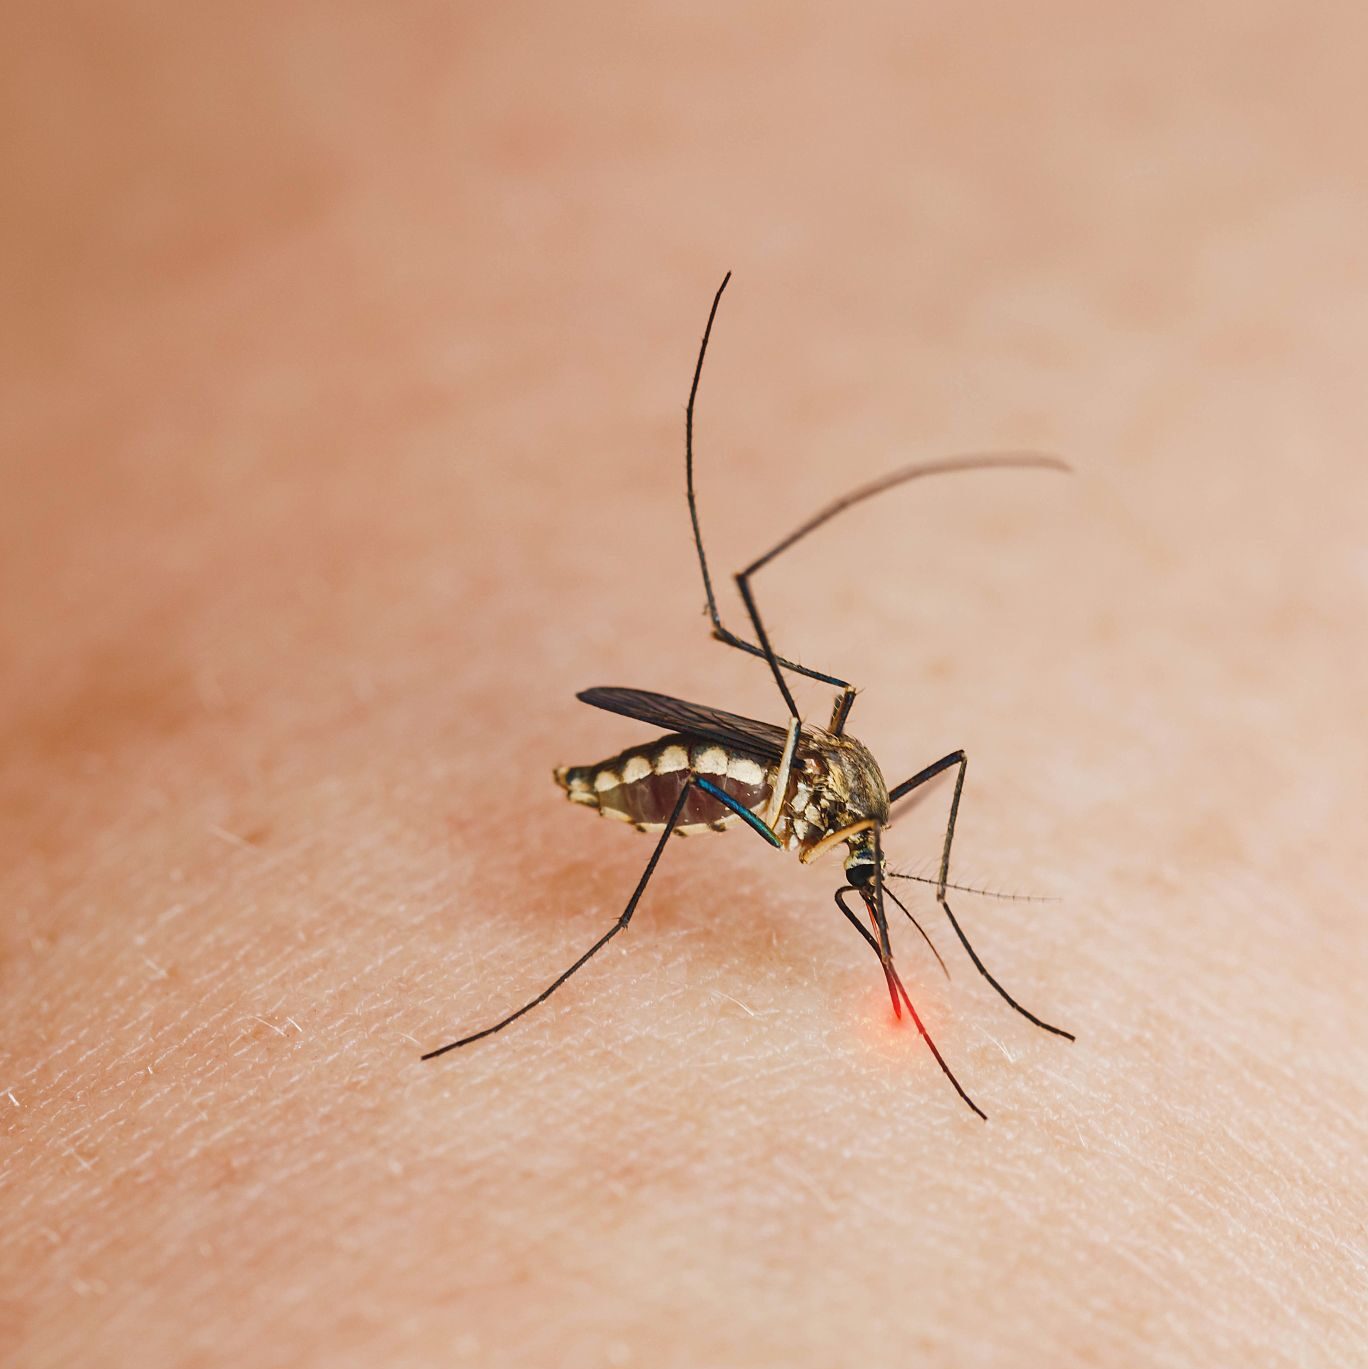 Striped mosquitoes are eating blood on human skin.Leishmaniasis, Encephalitis, Yellow Fever, Dengue, Malaria Disease, Mayaro or Zika Virus Infectious Culex Mosquito Parasite Insect Macro.